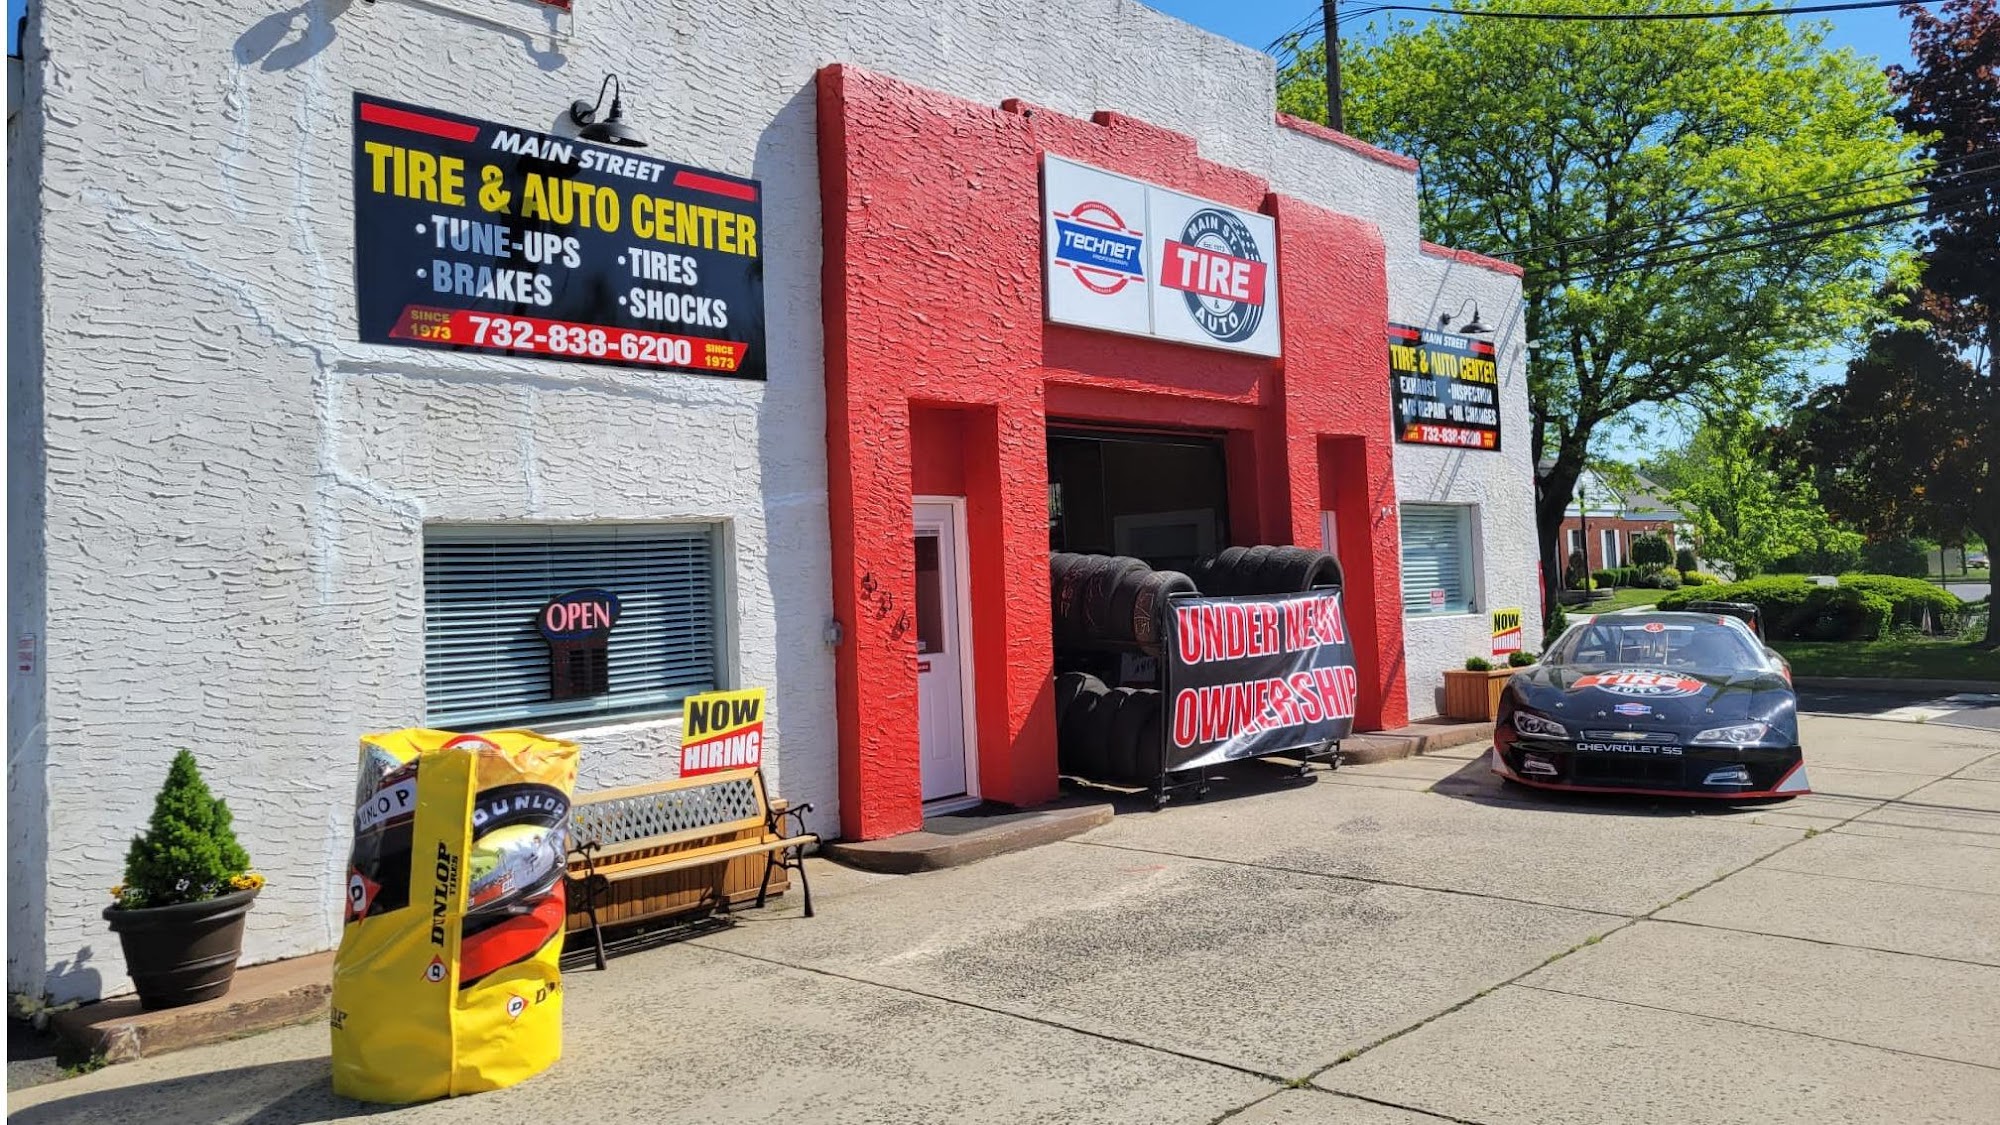 Main Street Tire & Auto 536 Main St, Spotswood New Jersey 08884